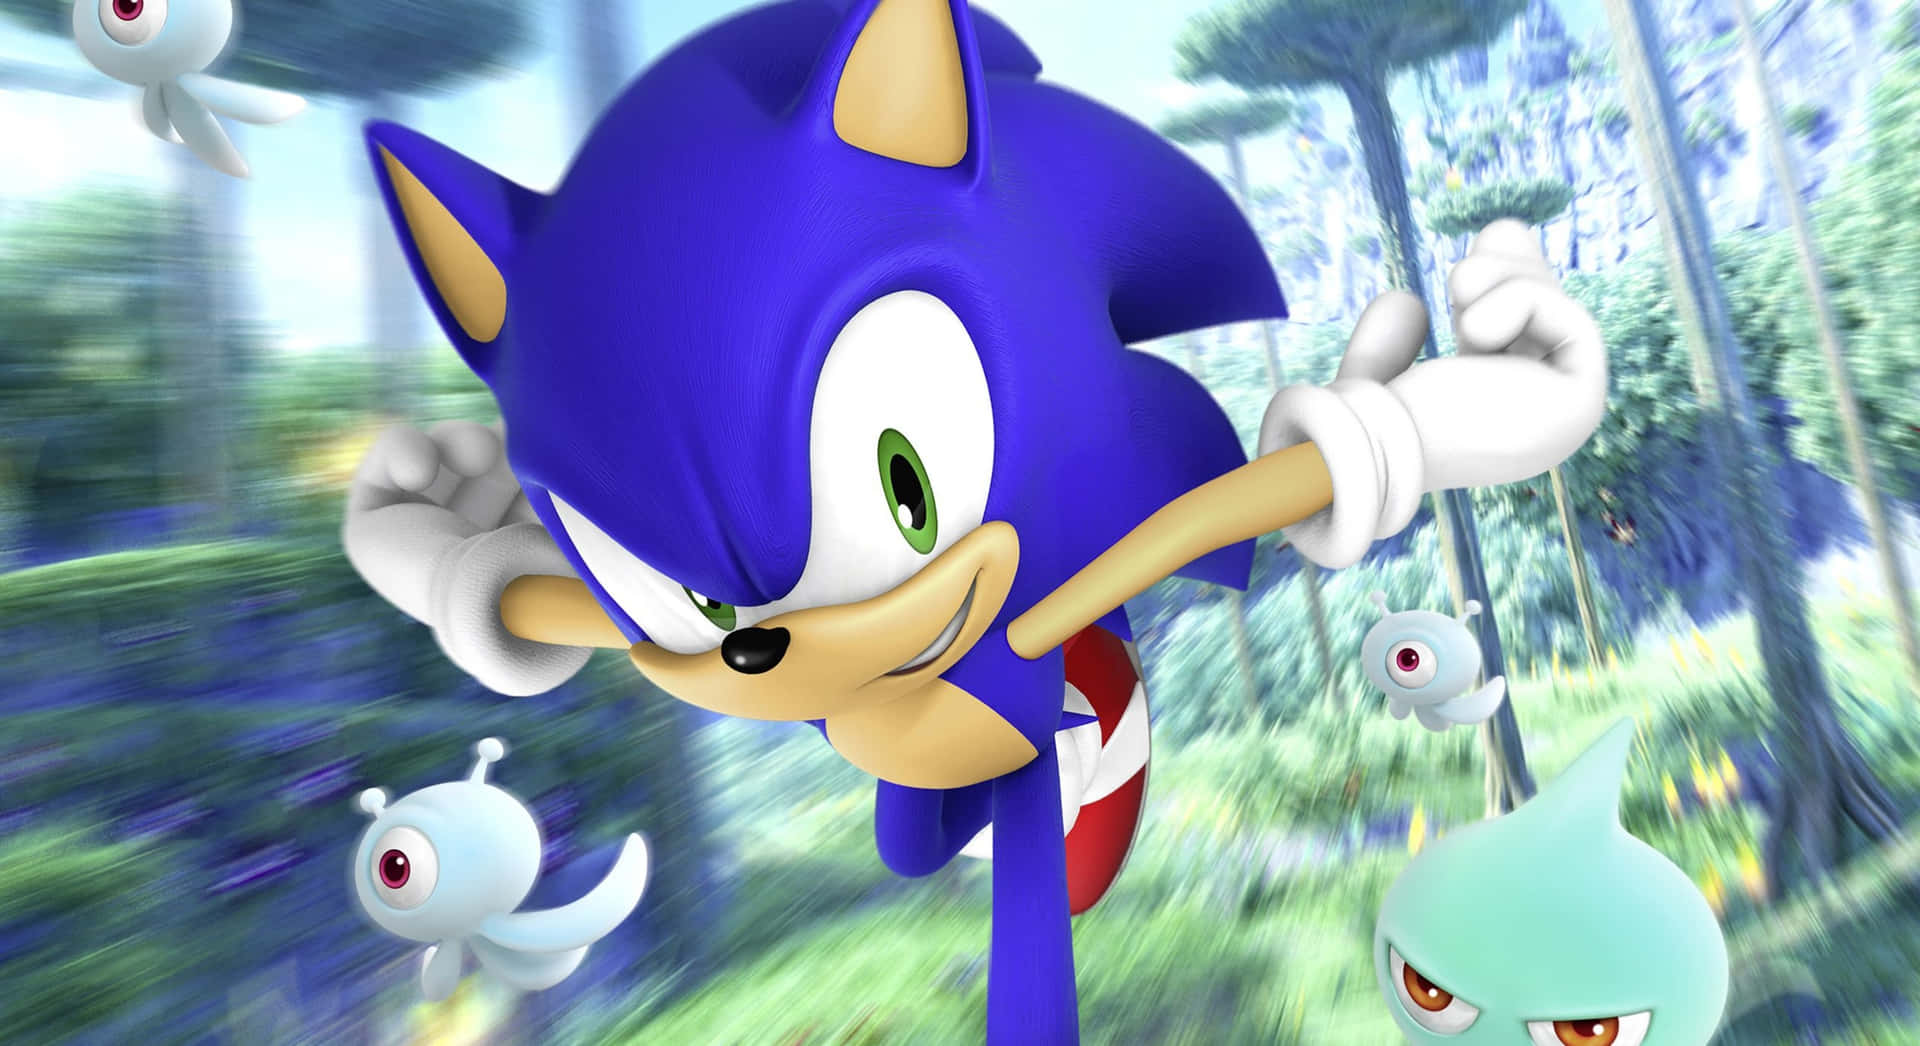 Sonicthe Hedgehog Bakgrundsbilder